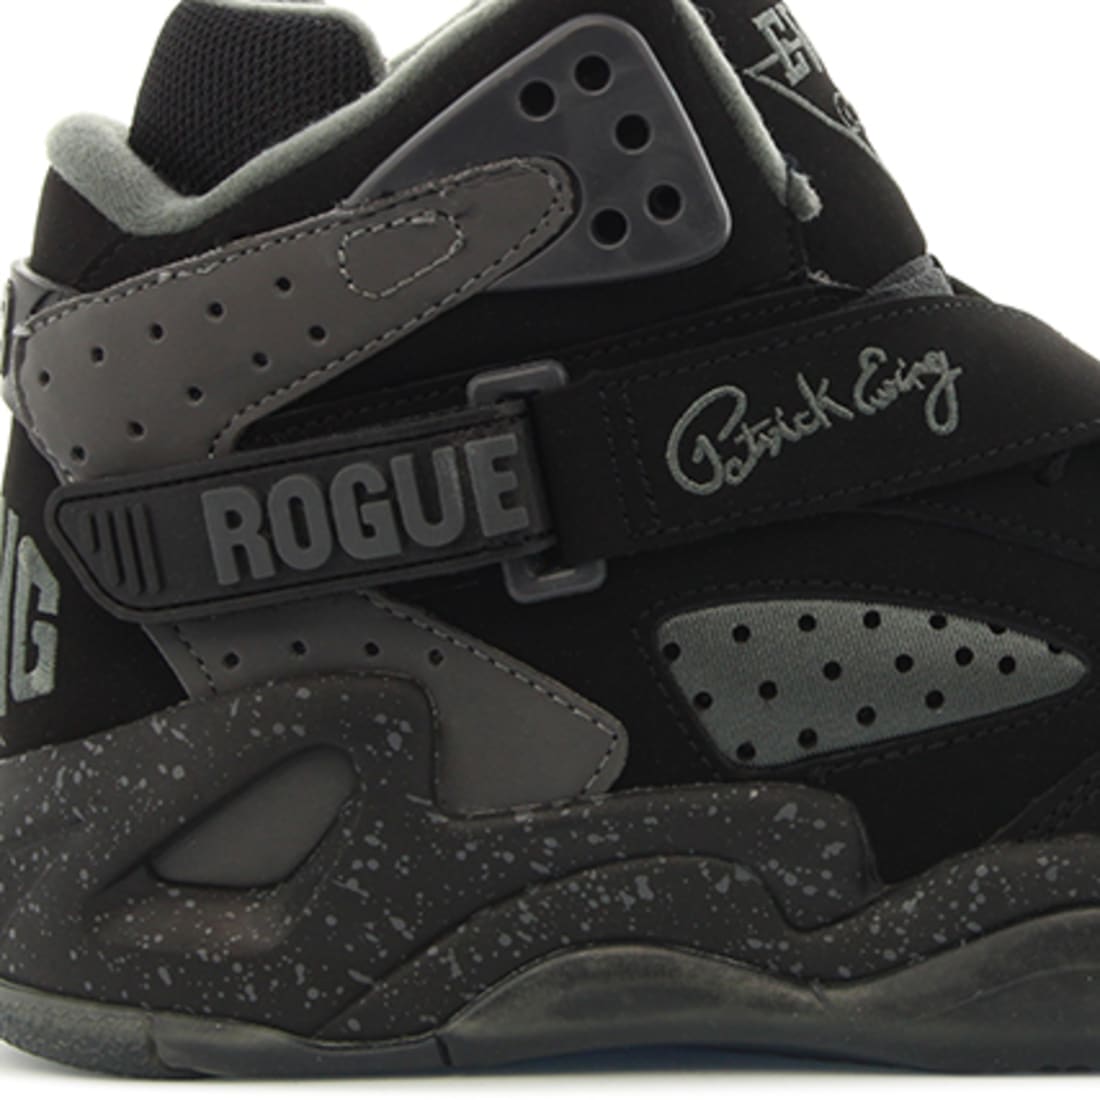 Ewing Athletics Baskets Rogue 1ew90216 Black Pewter